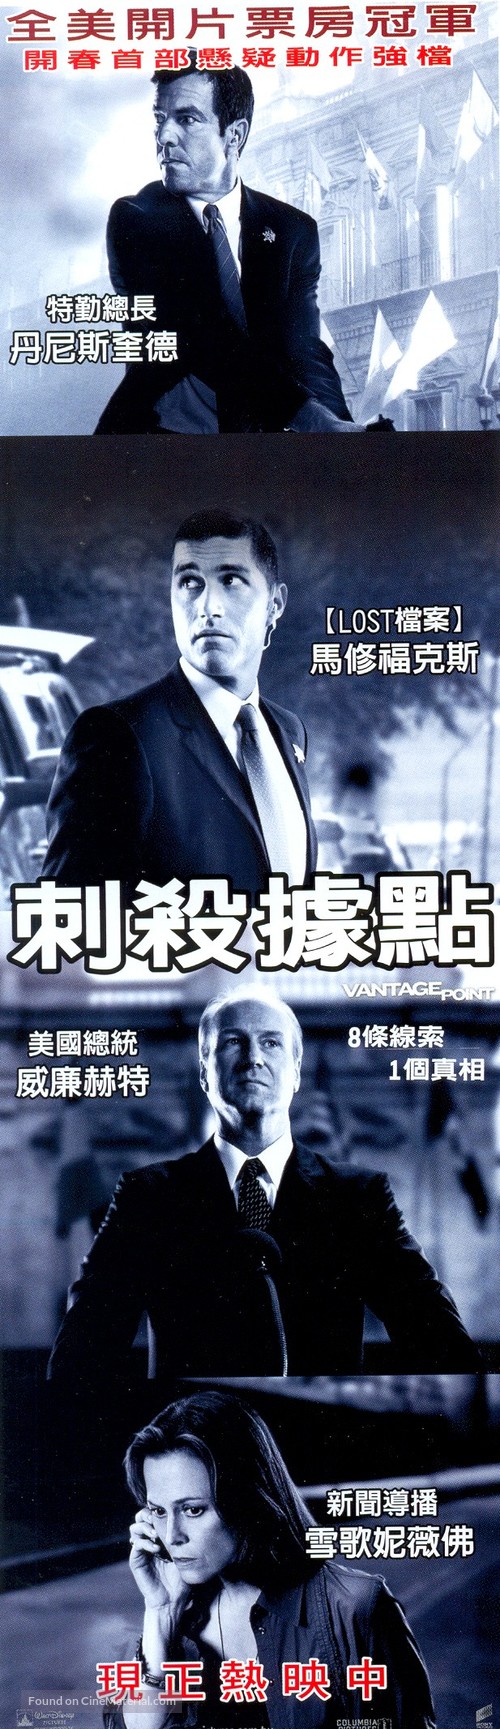 Vantage Point - Taiwanese Movie Poster